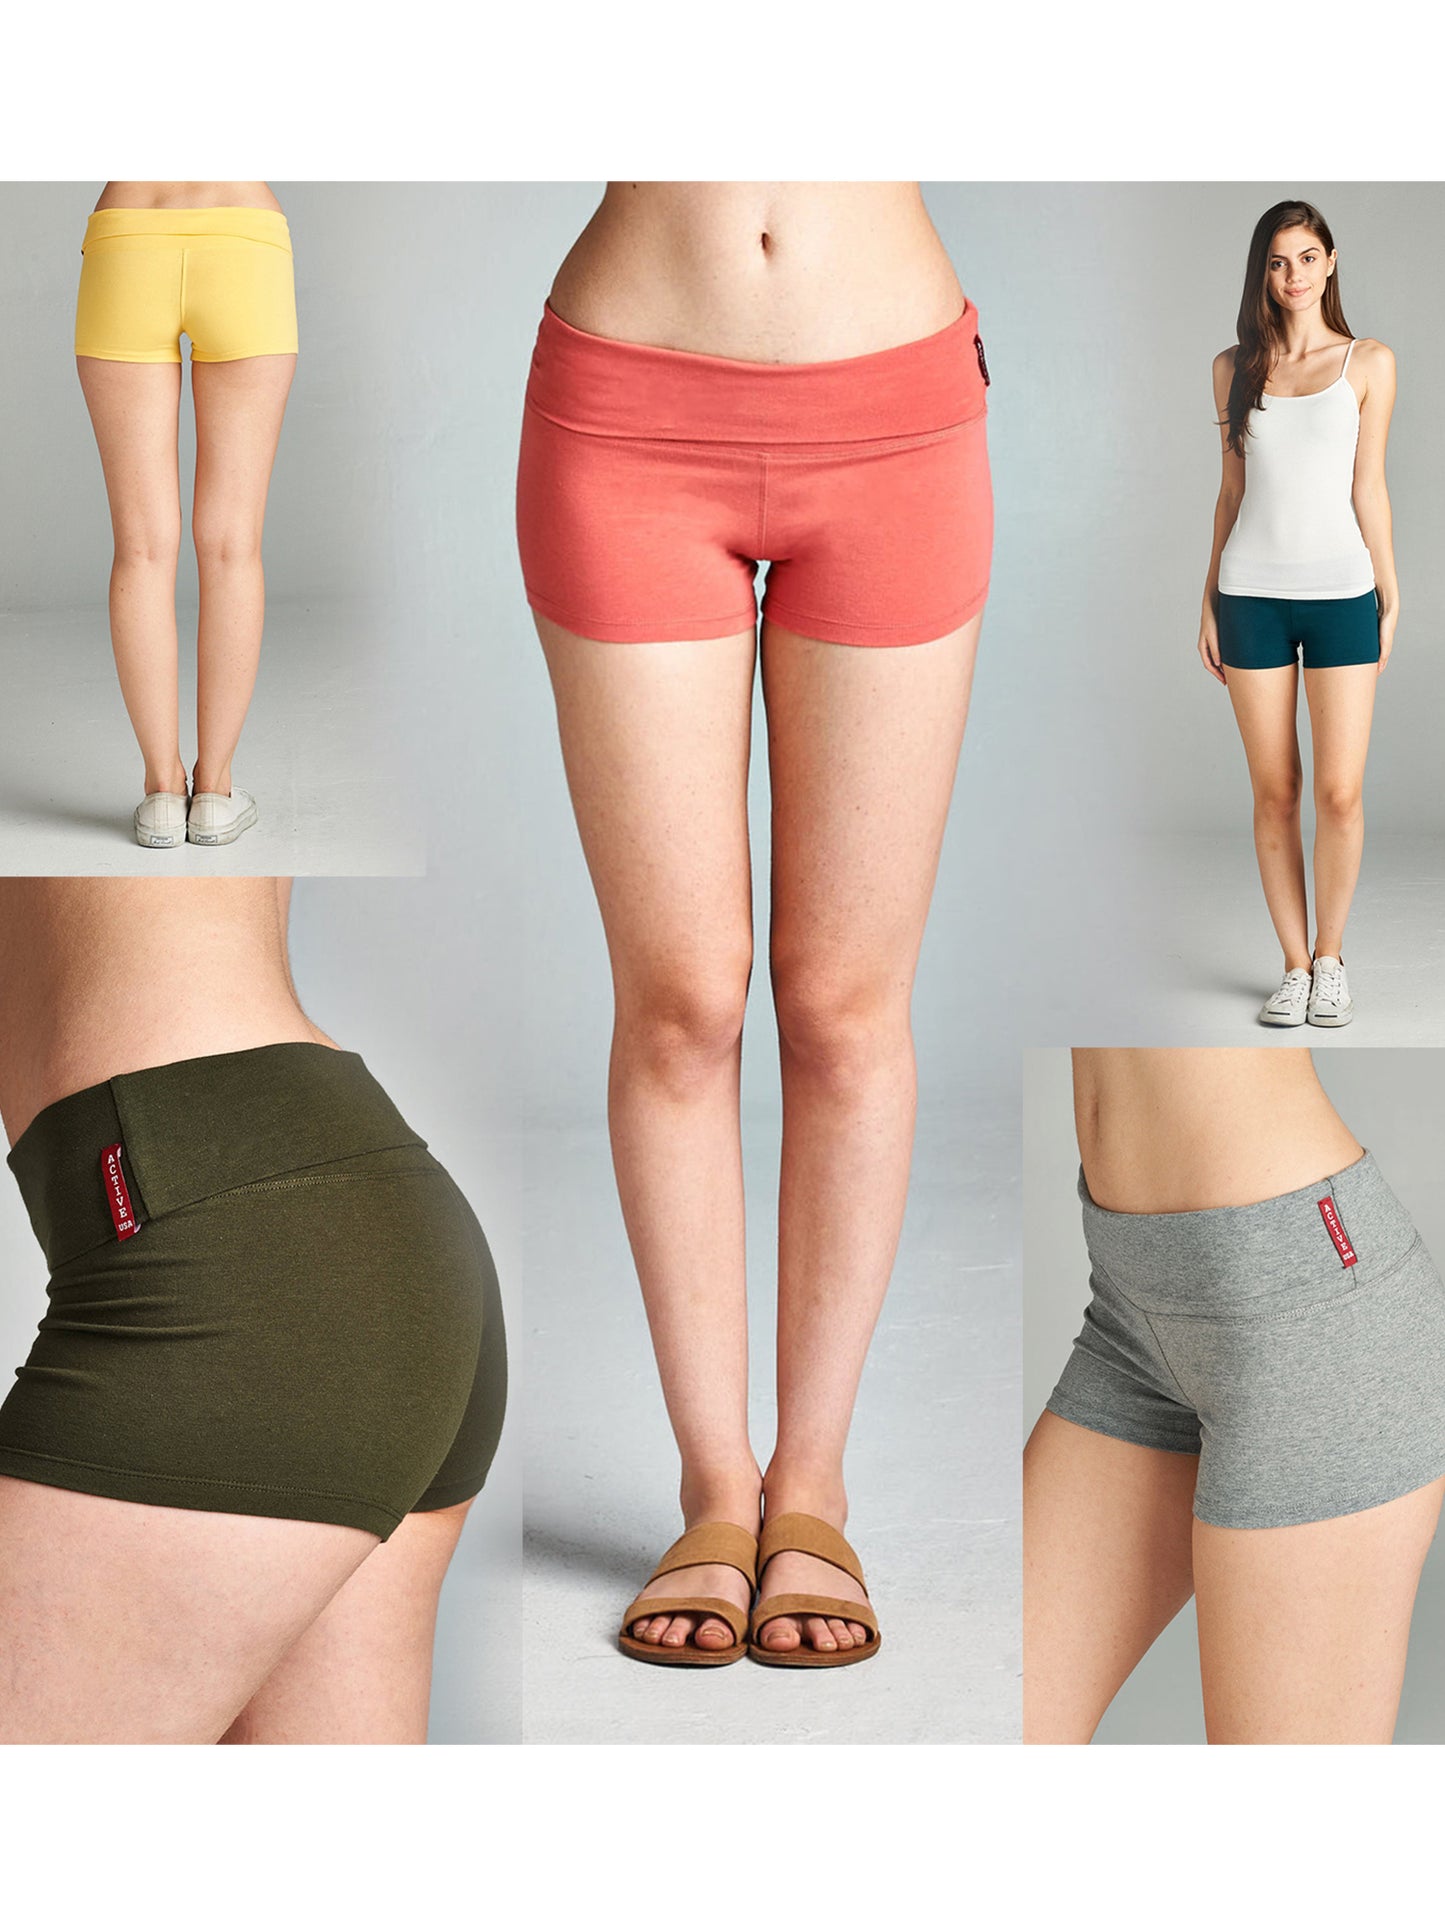 Emmalise Women's Active Yoga Shorts Low Rise Fold Over Workout Dance Pant